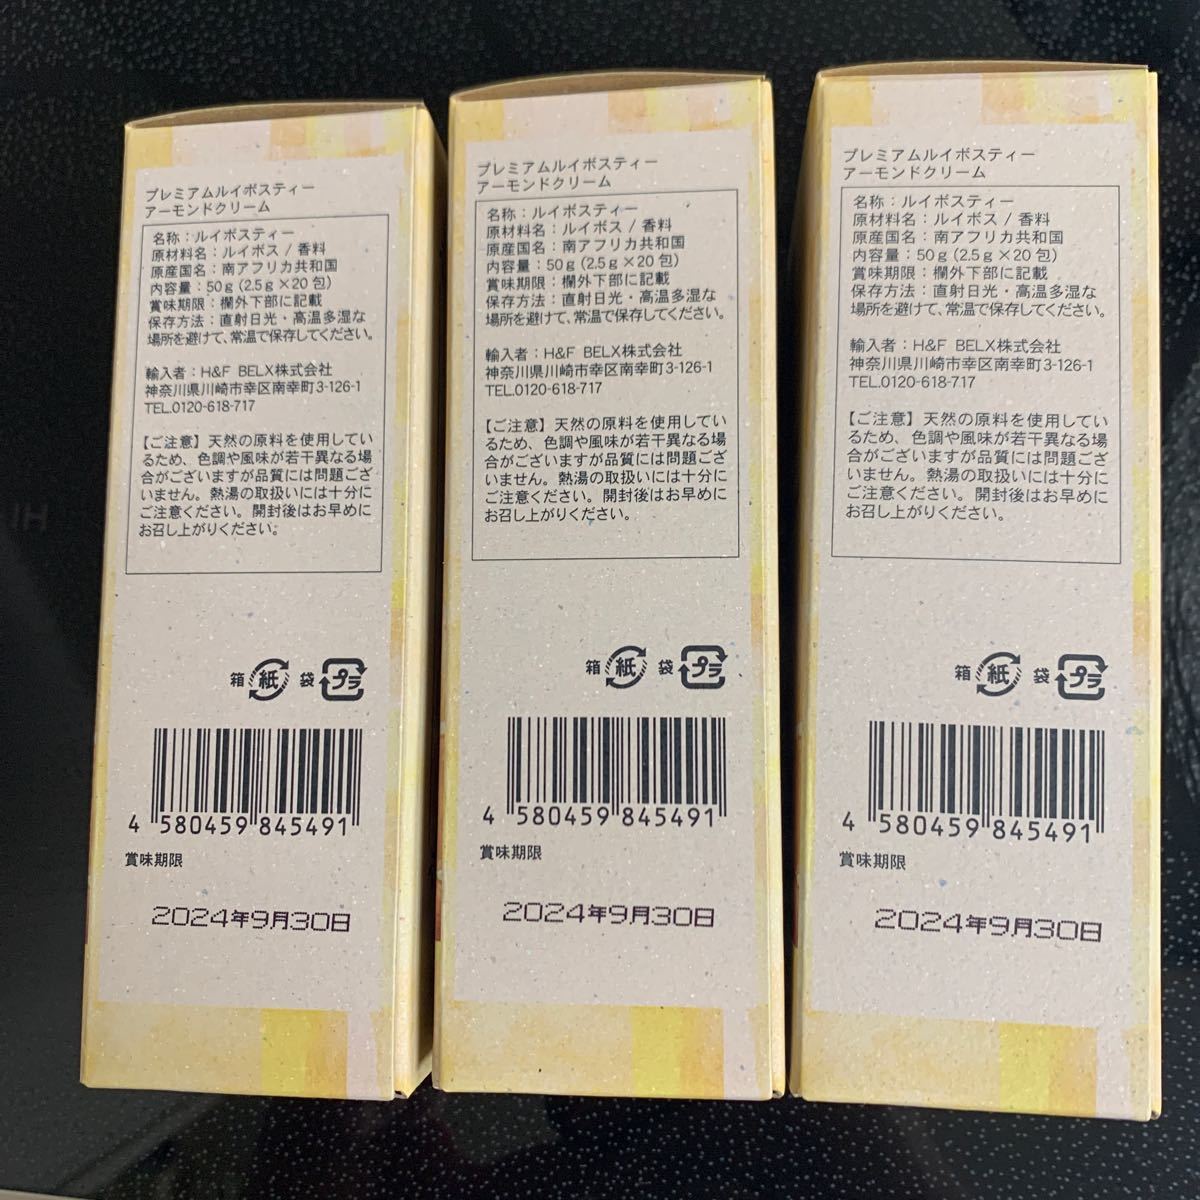 H&F BELX プレミアム フレーバーティー 2.5g × 20包 (アーモンドクリーム)  ルイボスティー　☆3個セット☆